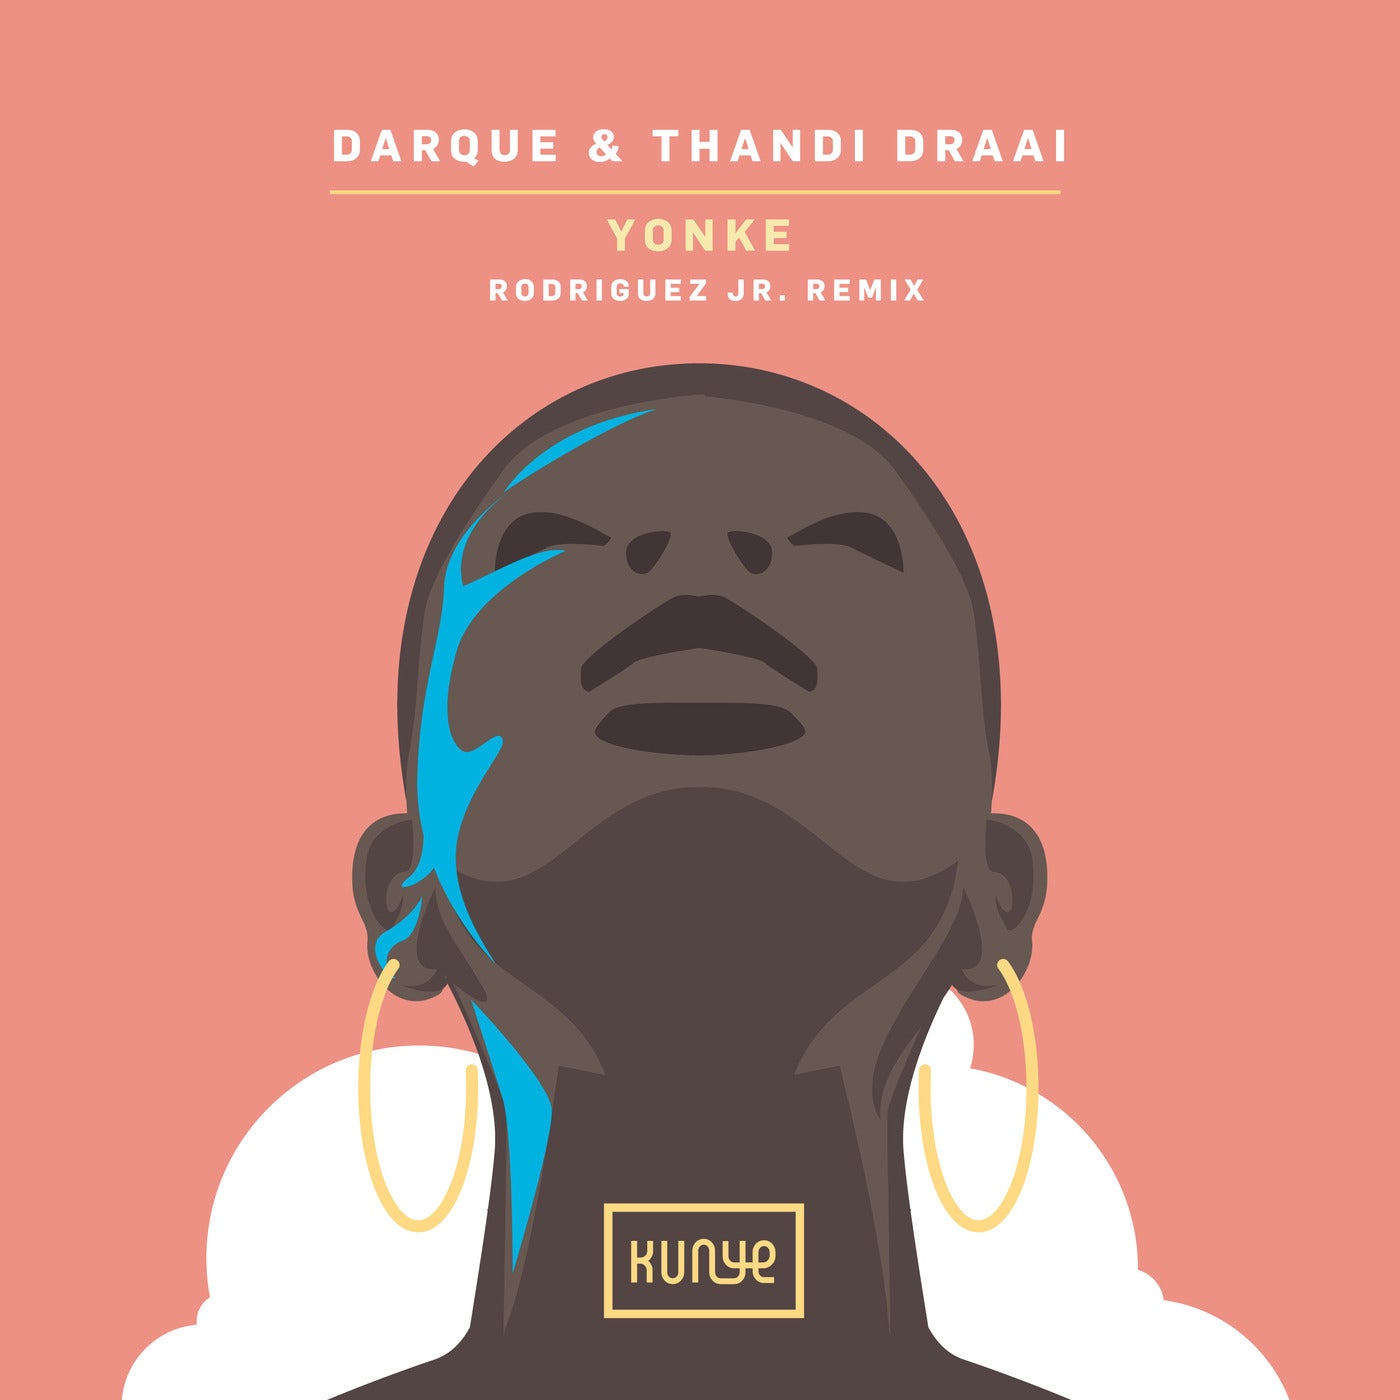 image cover: Darque, Thandi Draai - Yonke - (Rodriguez Jr. Remix) on Kunye